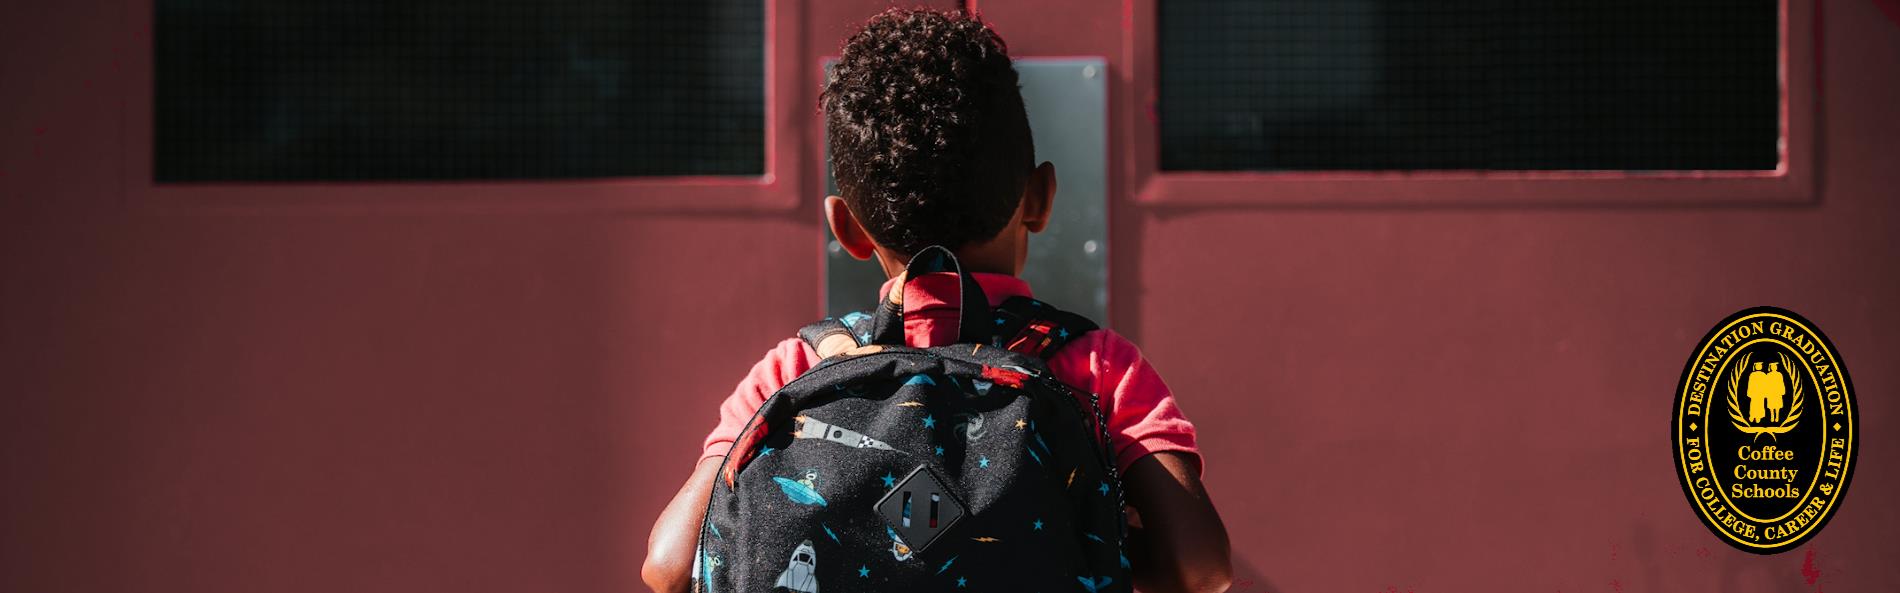 Boy with backpack standing at school doors